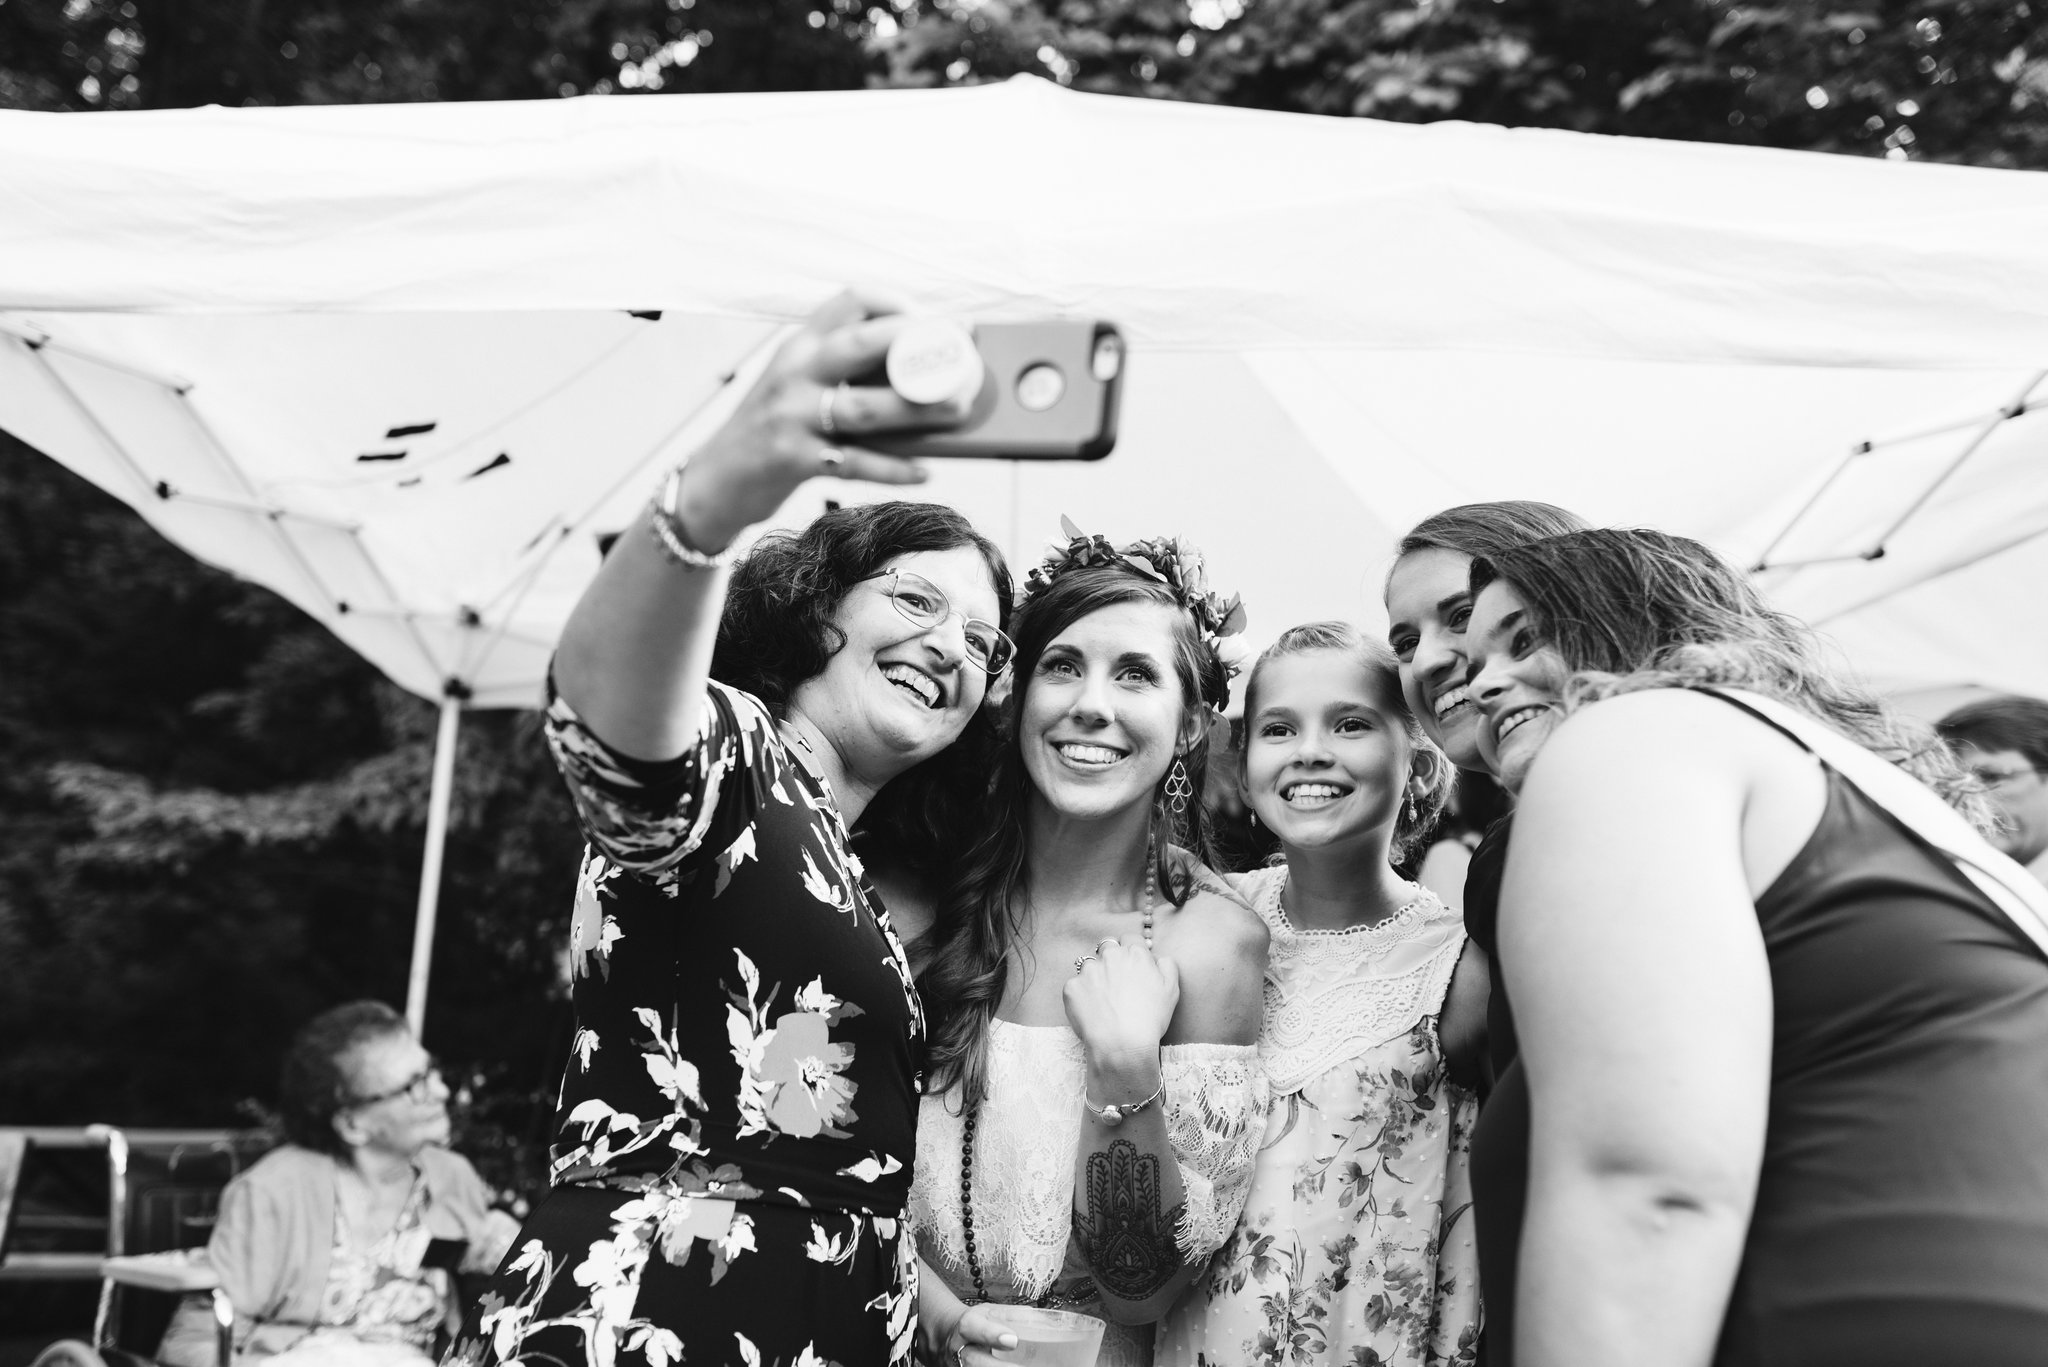  Annapolis, Quaker Wedding, Maryland Wedding Photographer, Intimate, Small Wedding, Vintage, DIY, Bride Taking Selfie with Family, Black and White Photo 